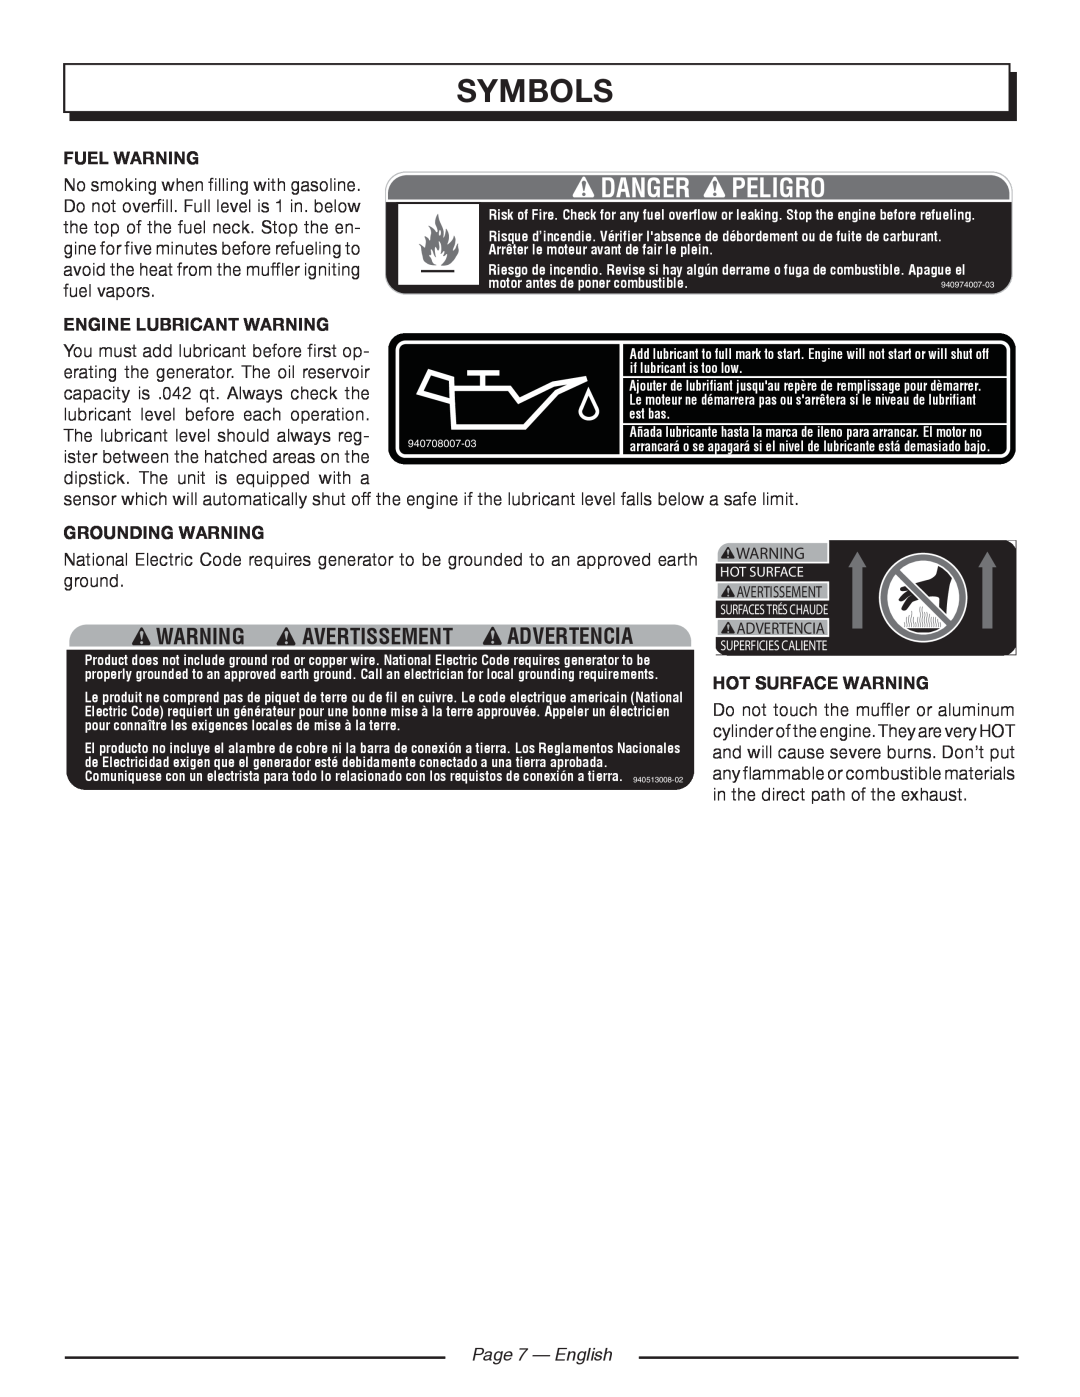 Homelite HGCA1400 Danger Peligro, Symbols, Warning Avertissement Advertencia, Fuel warning, engine LUBRICANT warning 